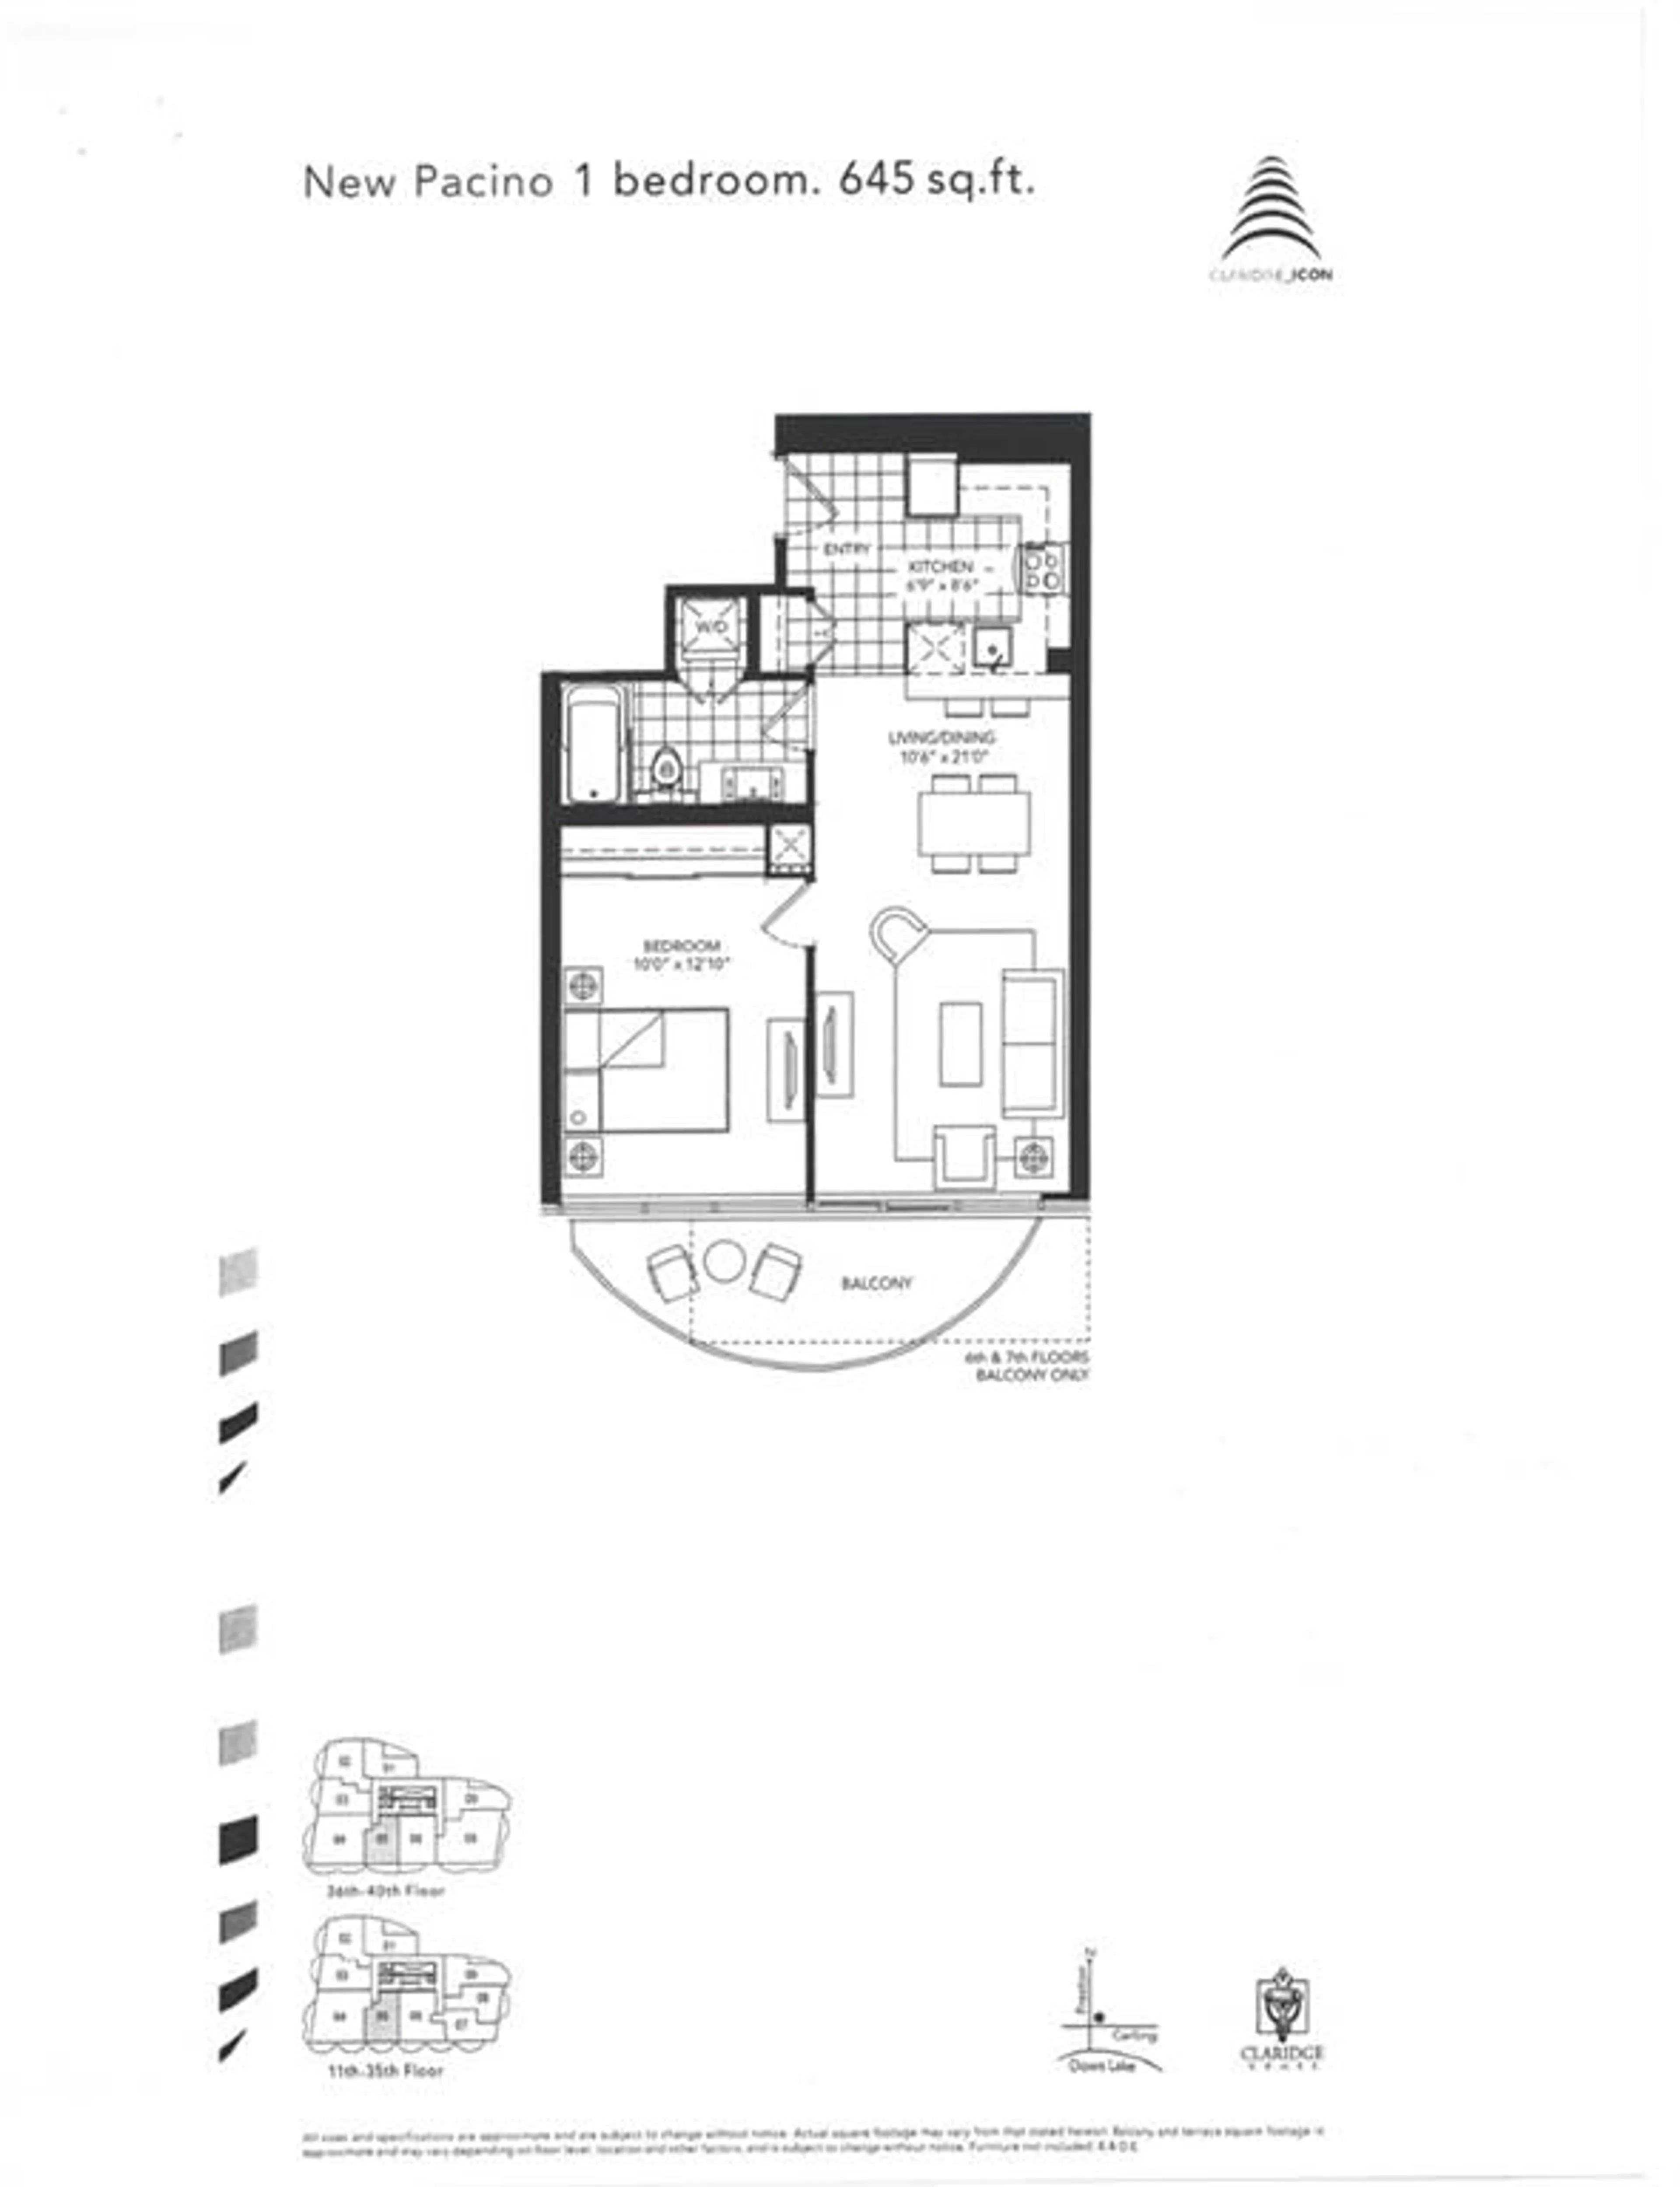 Floor plan for 805 CARLING Ave #1105, Ottawa Ontario K1S 5W9